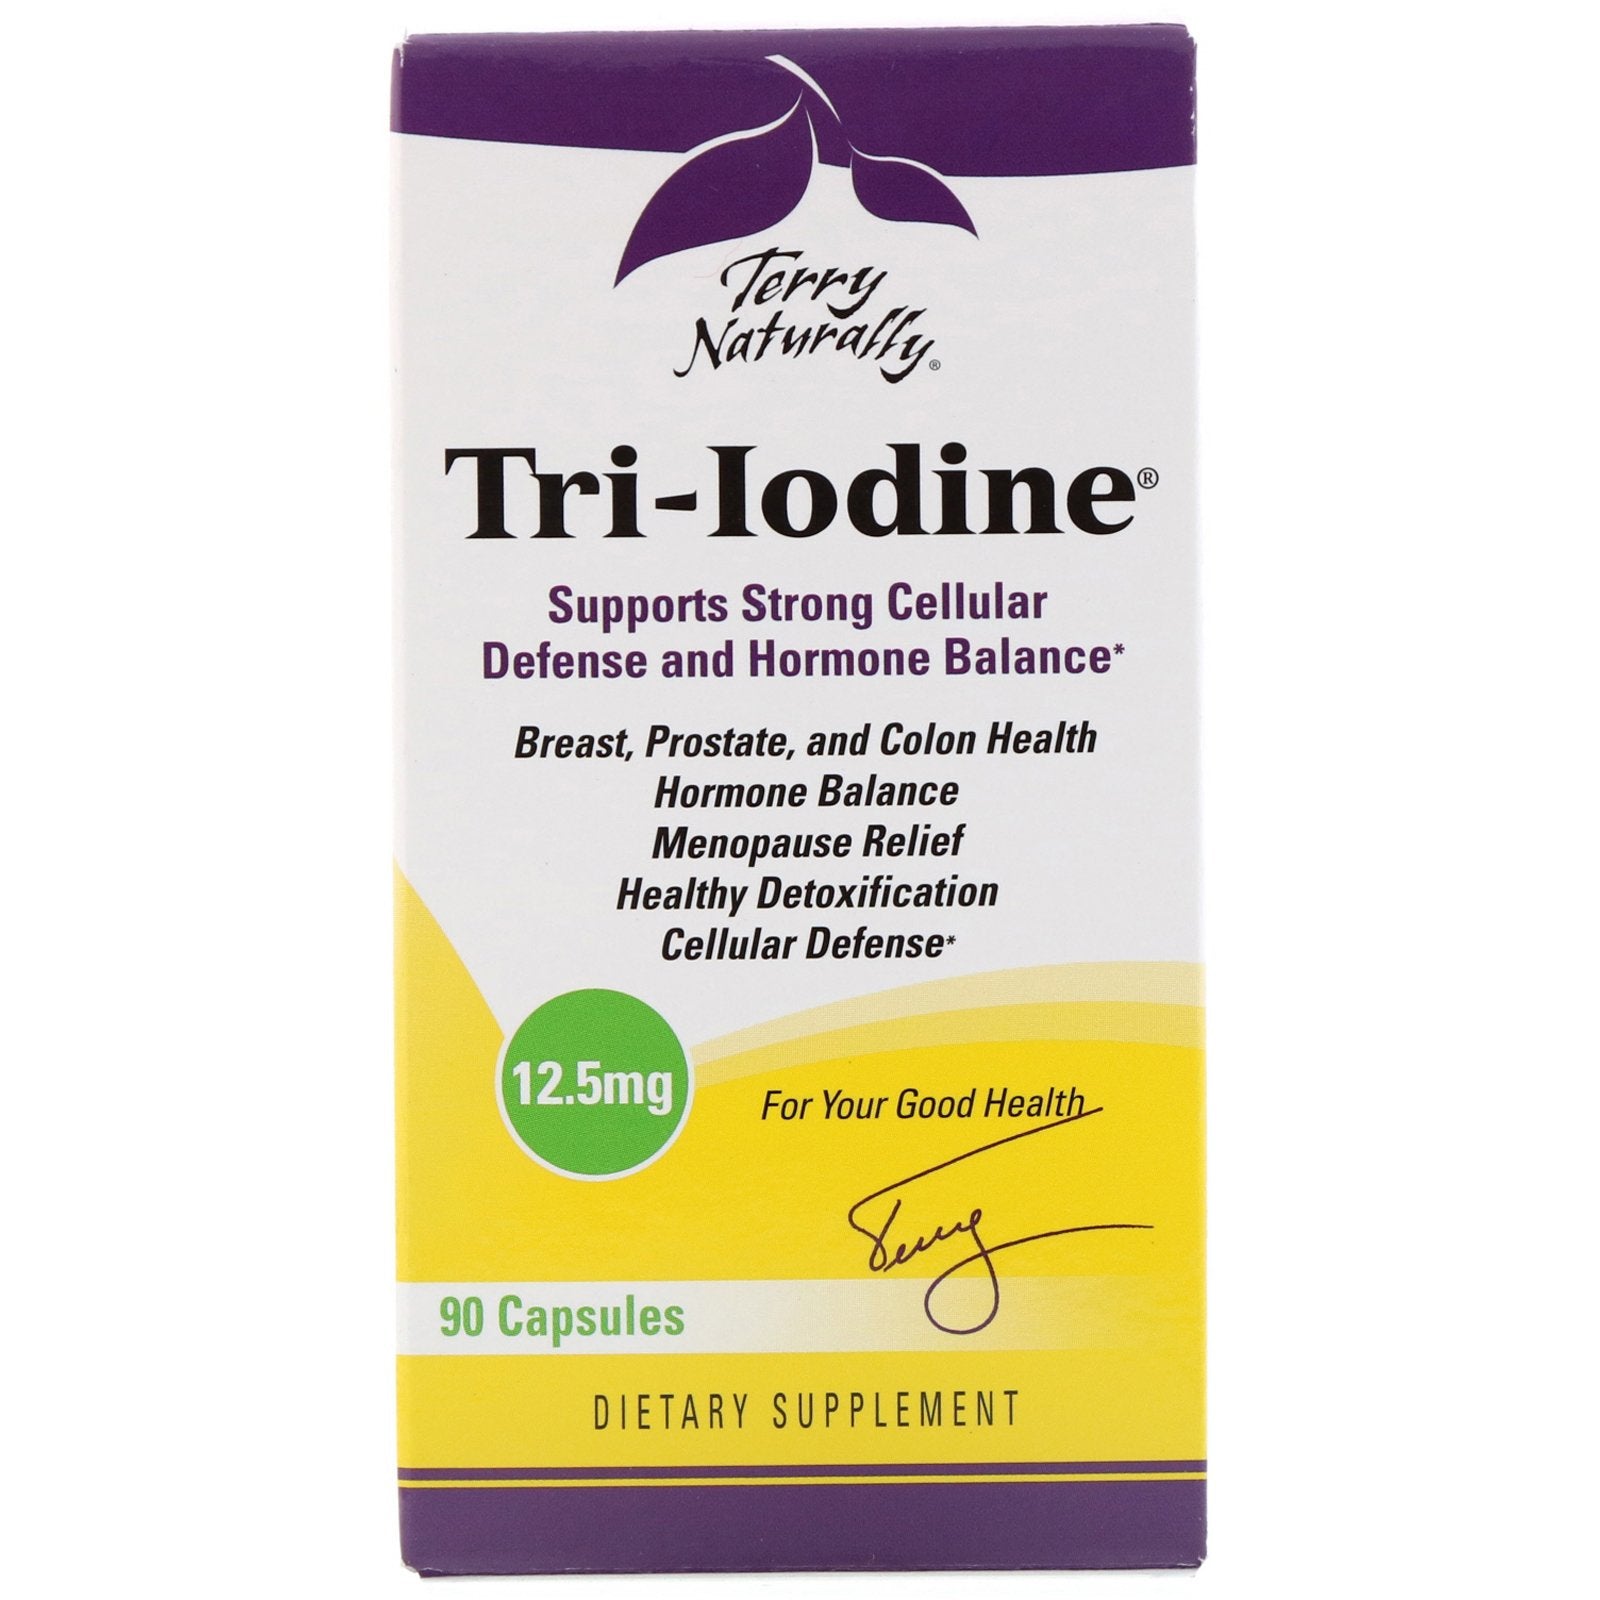 Terry Naturally Tri-Iodine 12.5 Mg, 90 Capsules